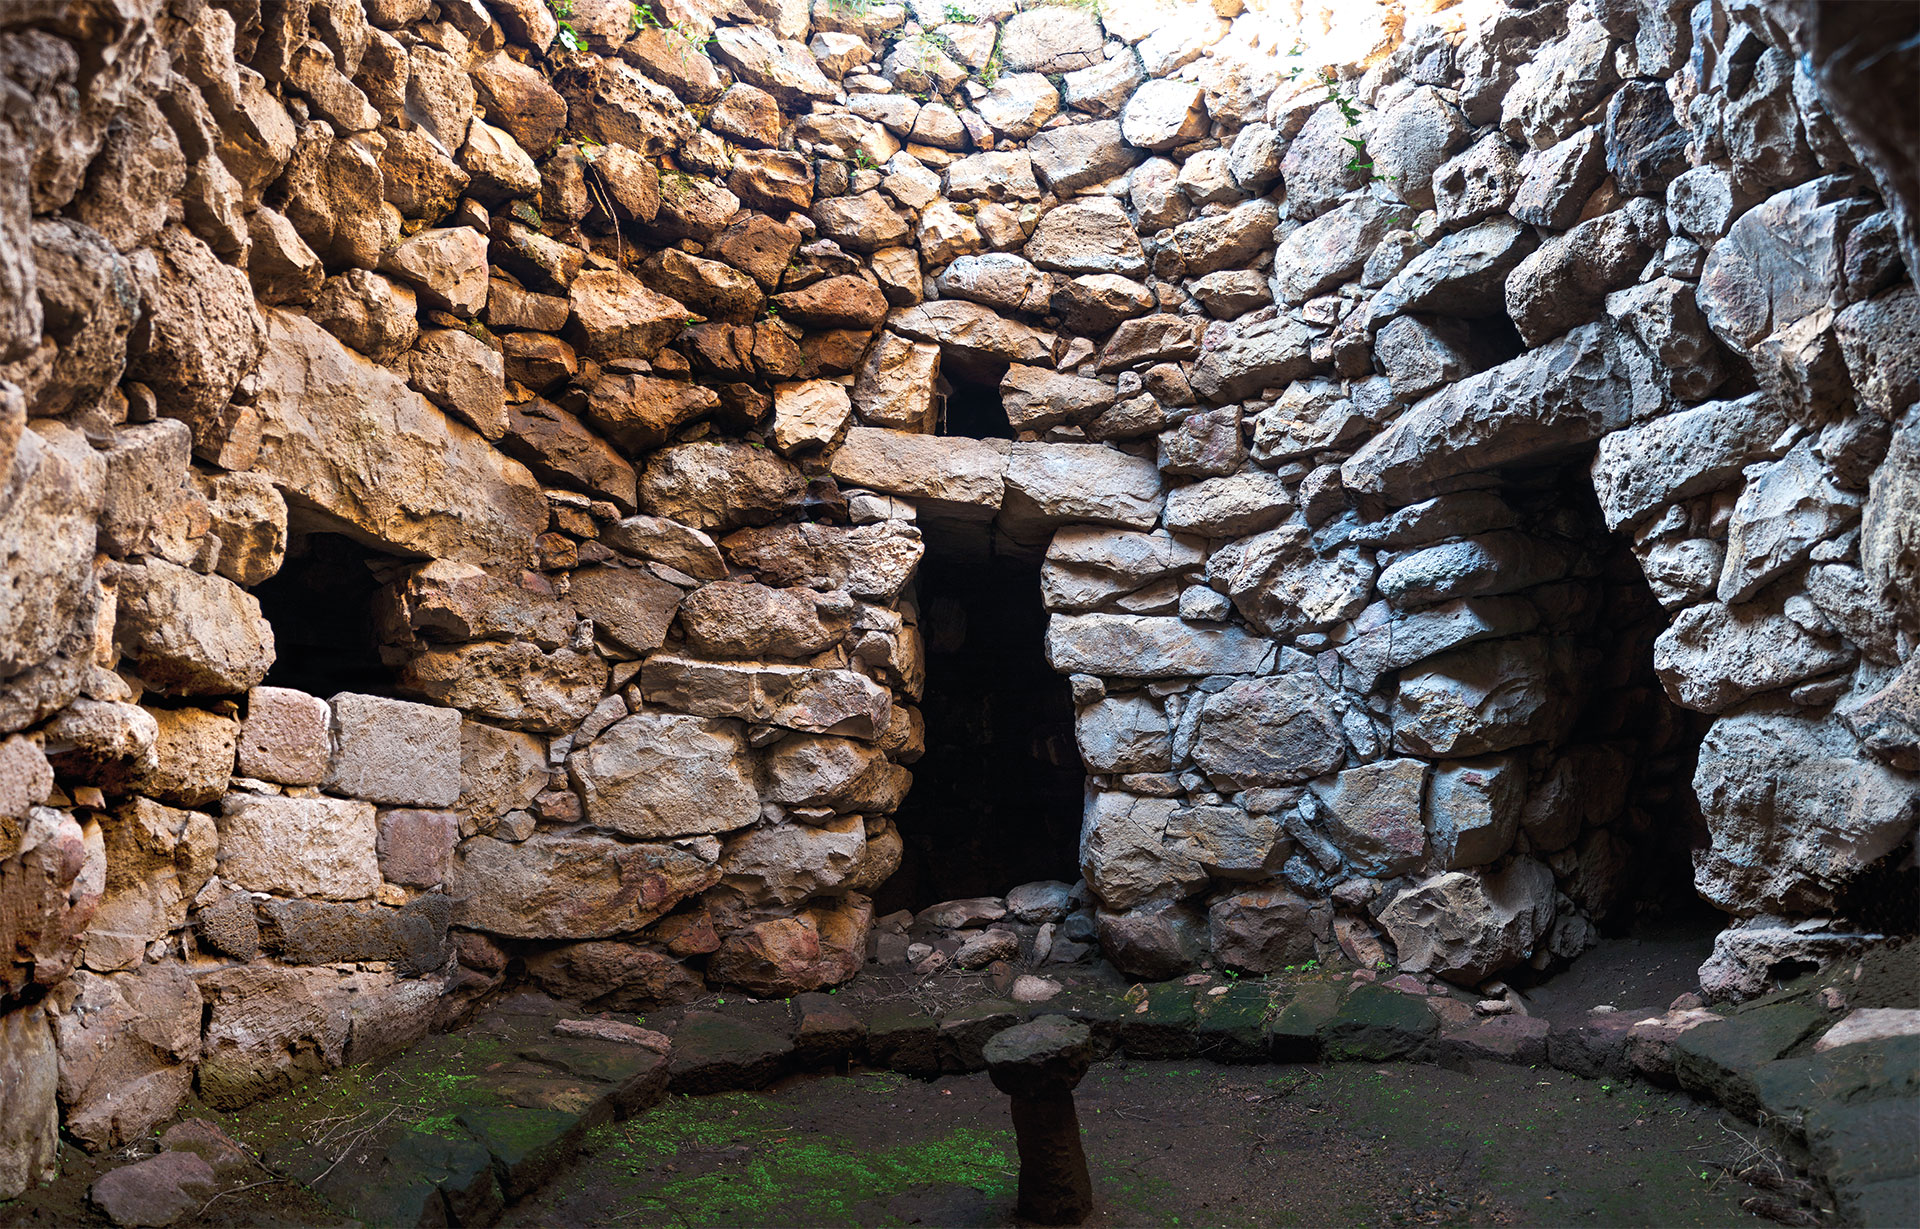 Hall 3: Interior of Nuraghe Funtana